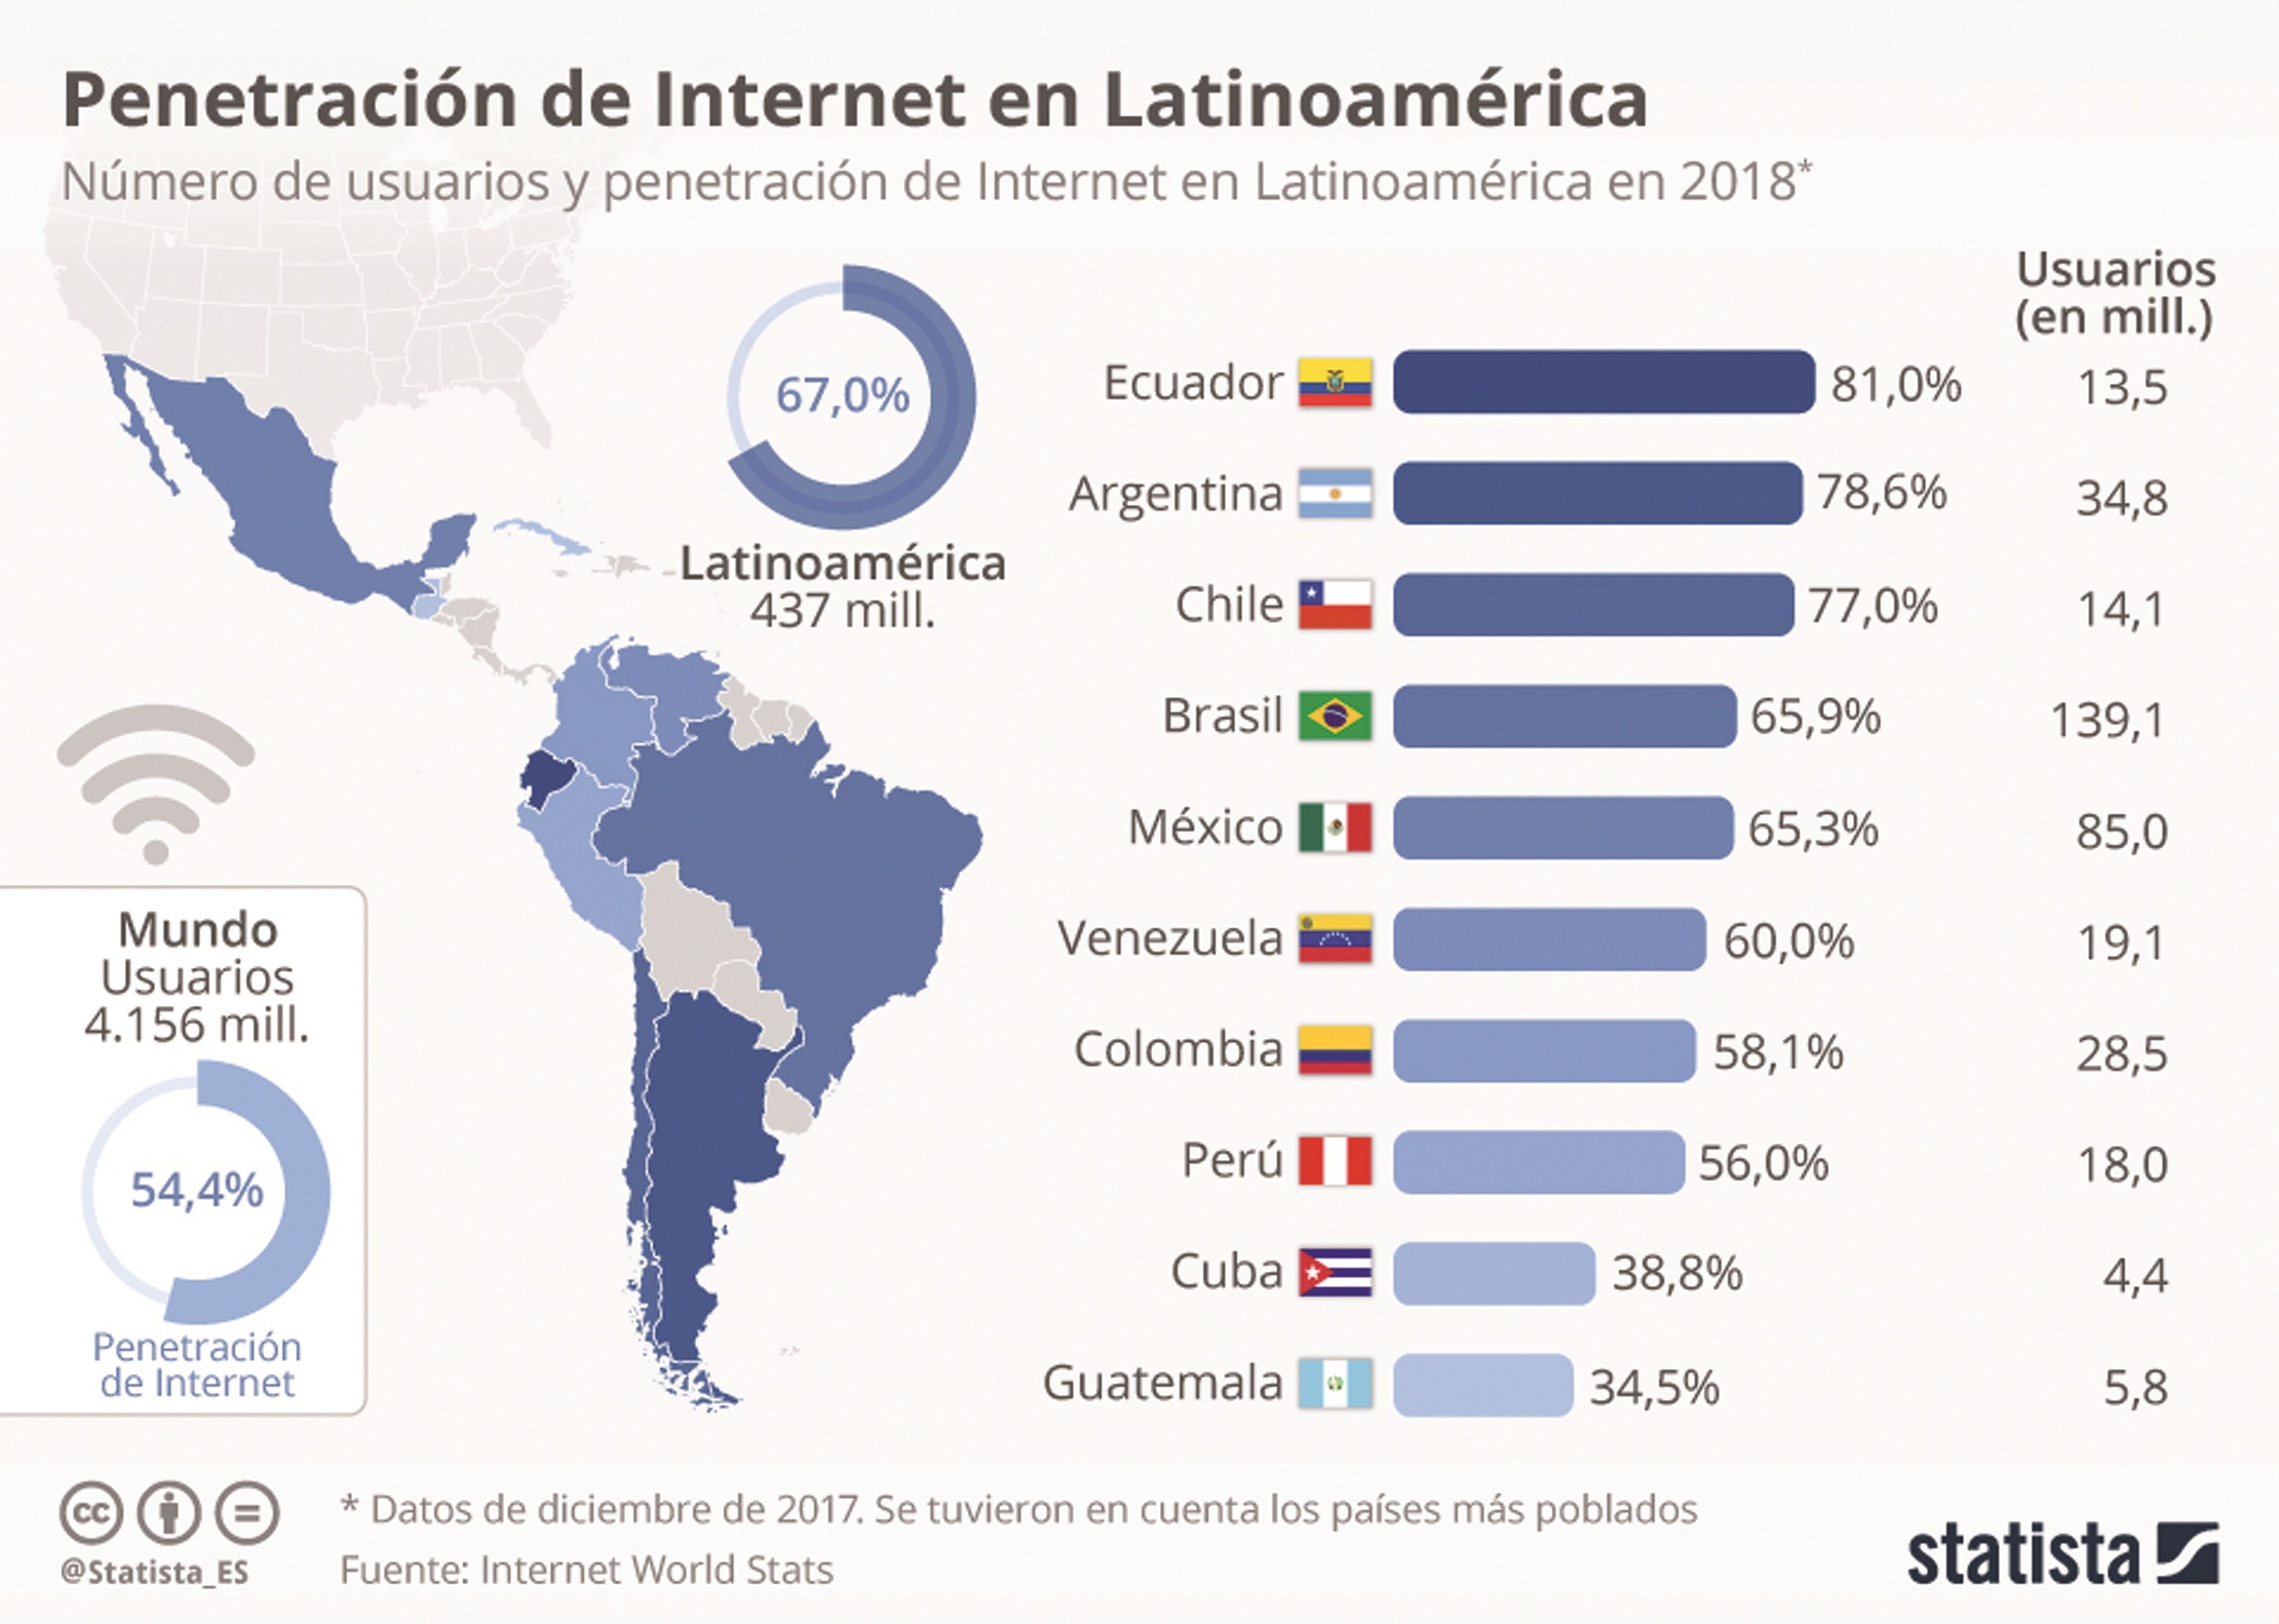 Qualcomm América Latina llega a las redes sociales